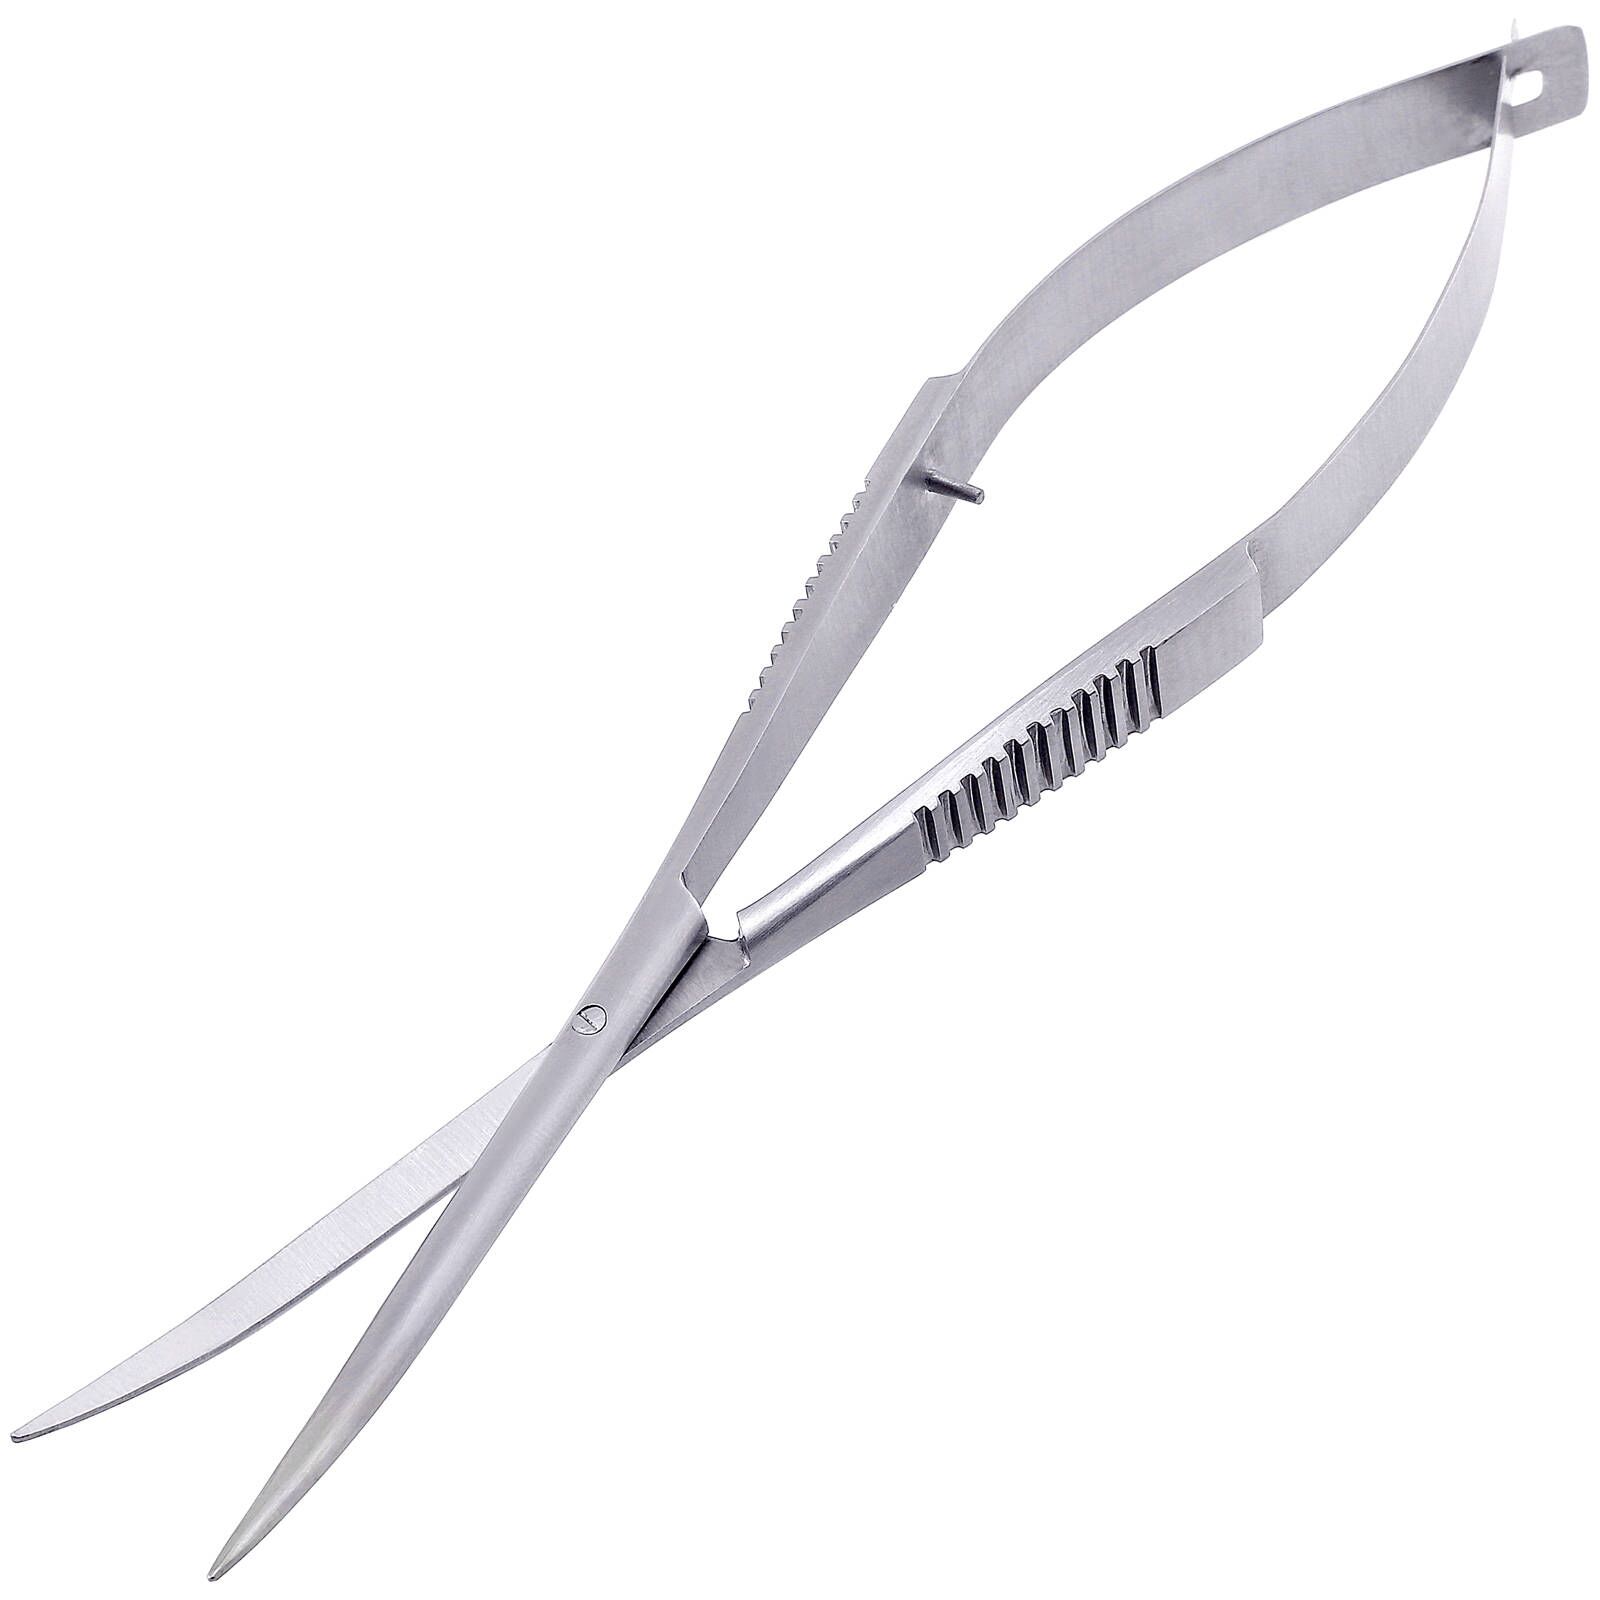 Aqua Rebell Spring Scissors curved 16 cm